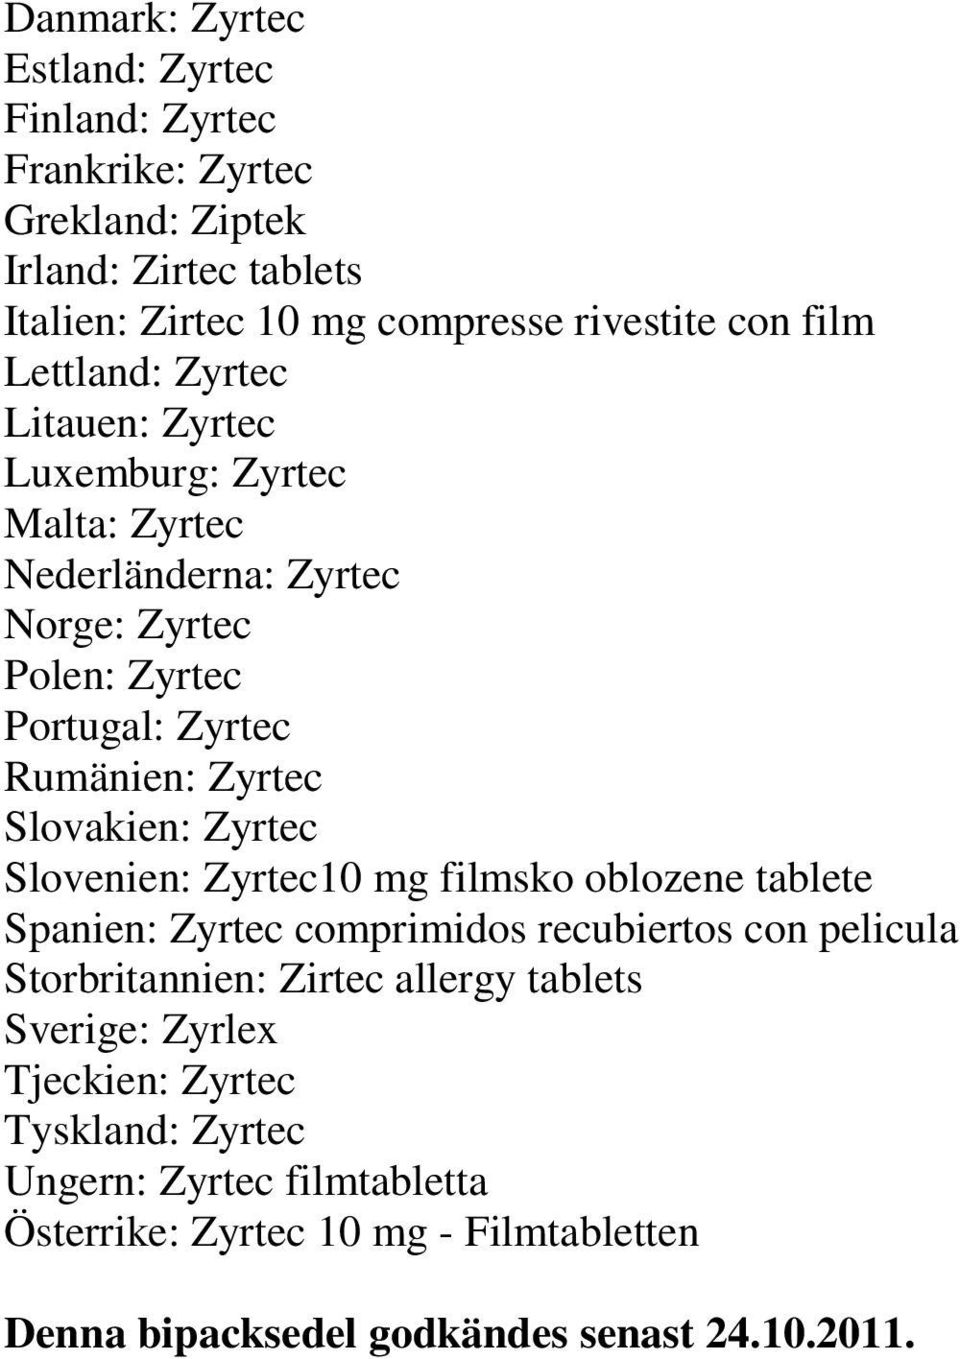 Slovakien: Zyrtec Slovenien: Zyrtec10 mg filmsko oblozene tablete Spanien: Zyrtec comprimidos recubiertos con pelicula Storbritannien: Zirtec allergy